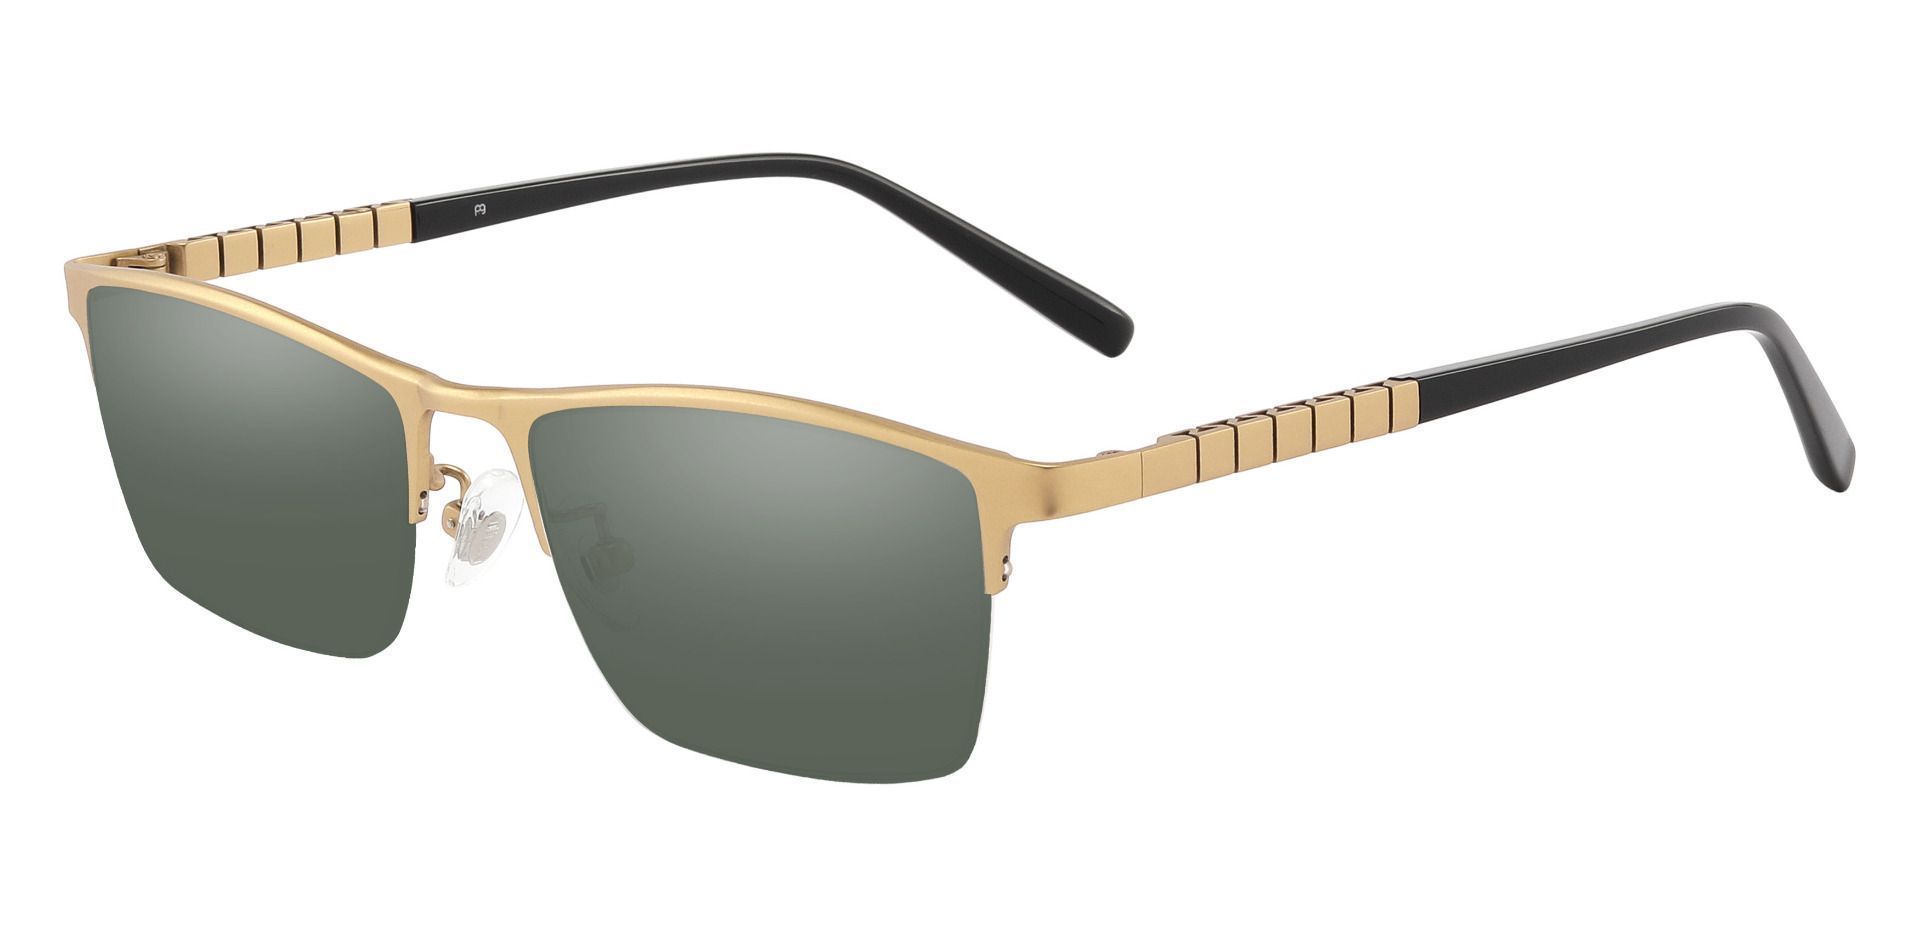 Maine Rectangle Progressive Sunglasses - Gold Frame With Green Lenses